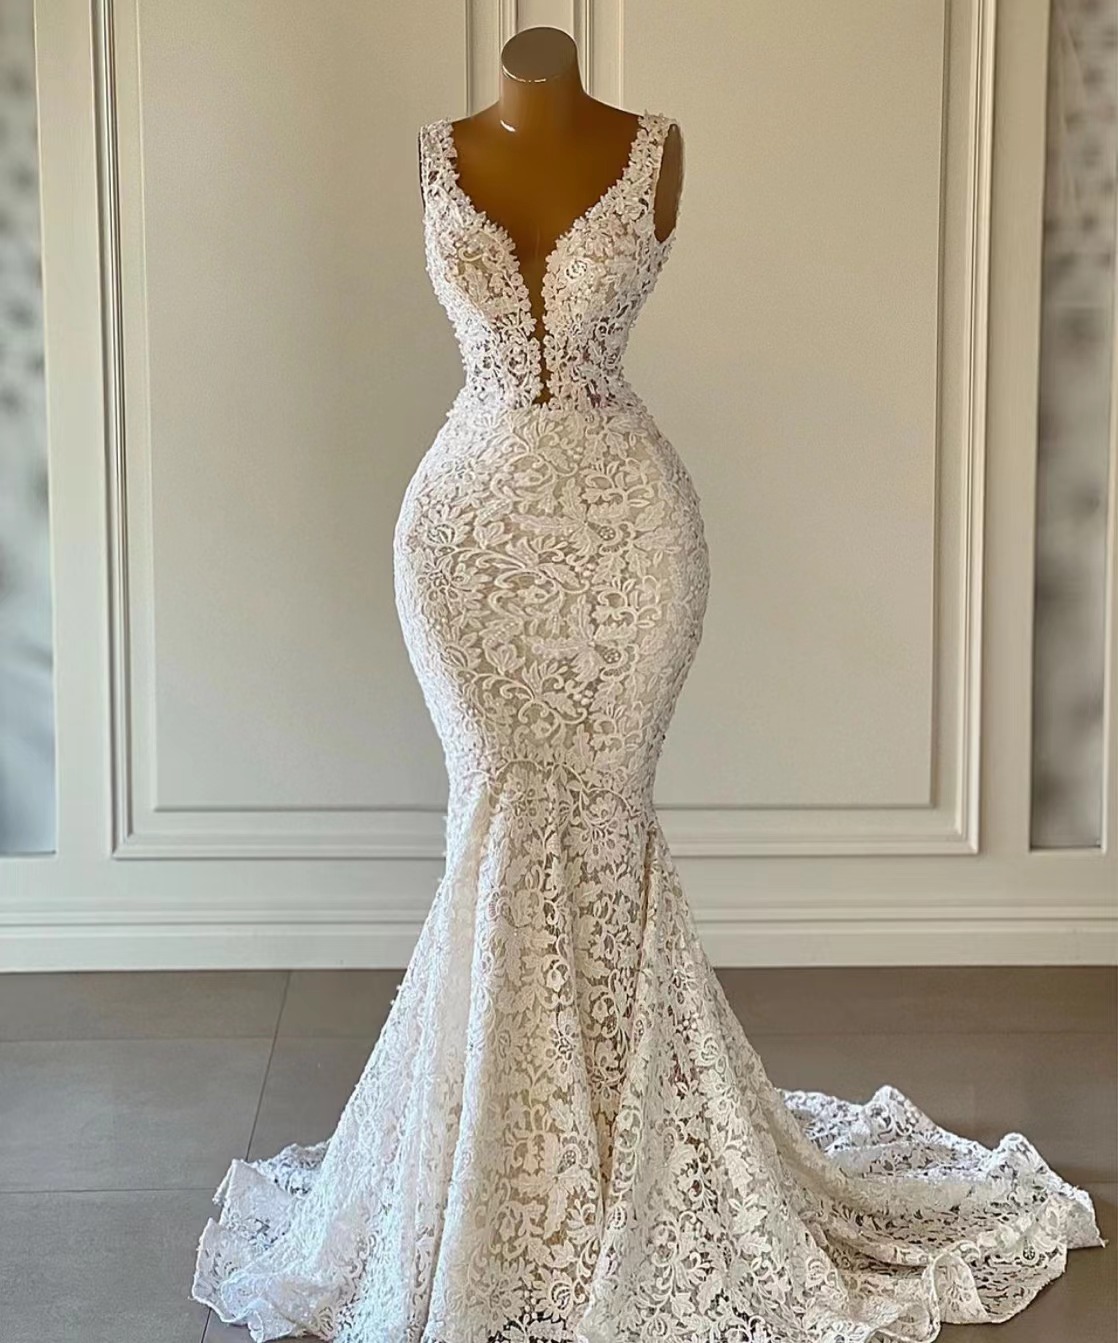 Lace Applique Wedding Dress, Wedding Dresses For Bride, Mermaid Wedding Dress, Wedding Gown, Simple Bridal Dresses, Vestidos De Novia, Robe De